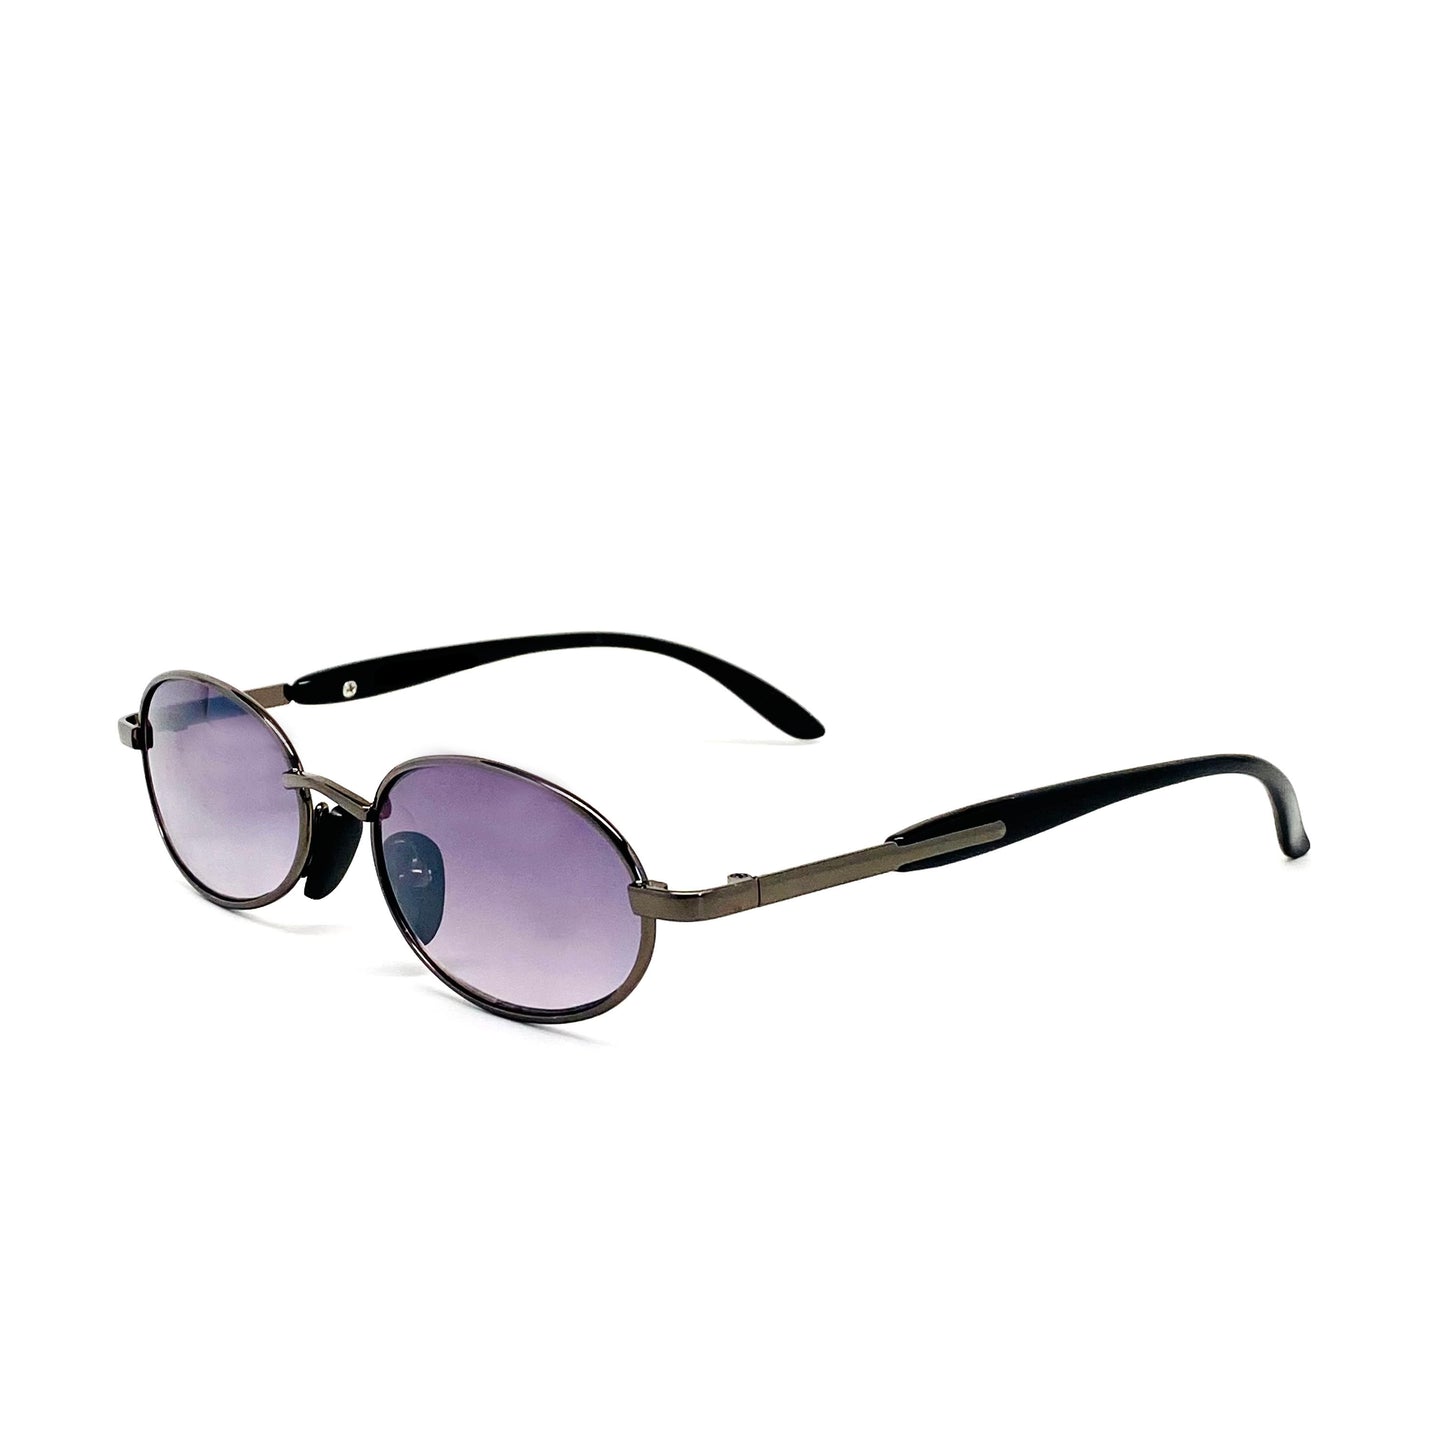 Small Size Mini 90s Deadstock Santa Fe Oval Sunglasses - Grey Lens